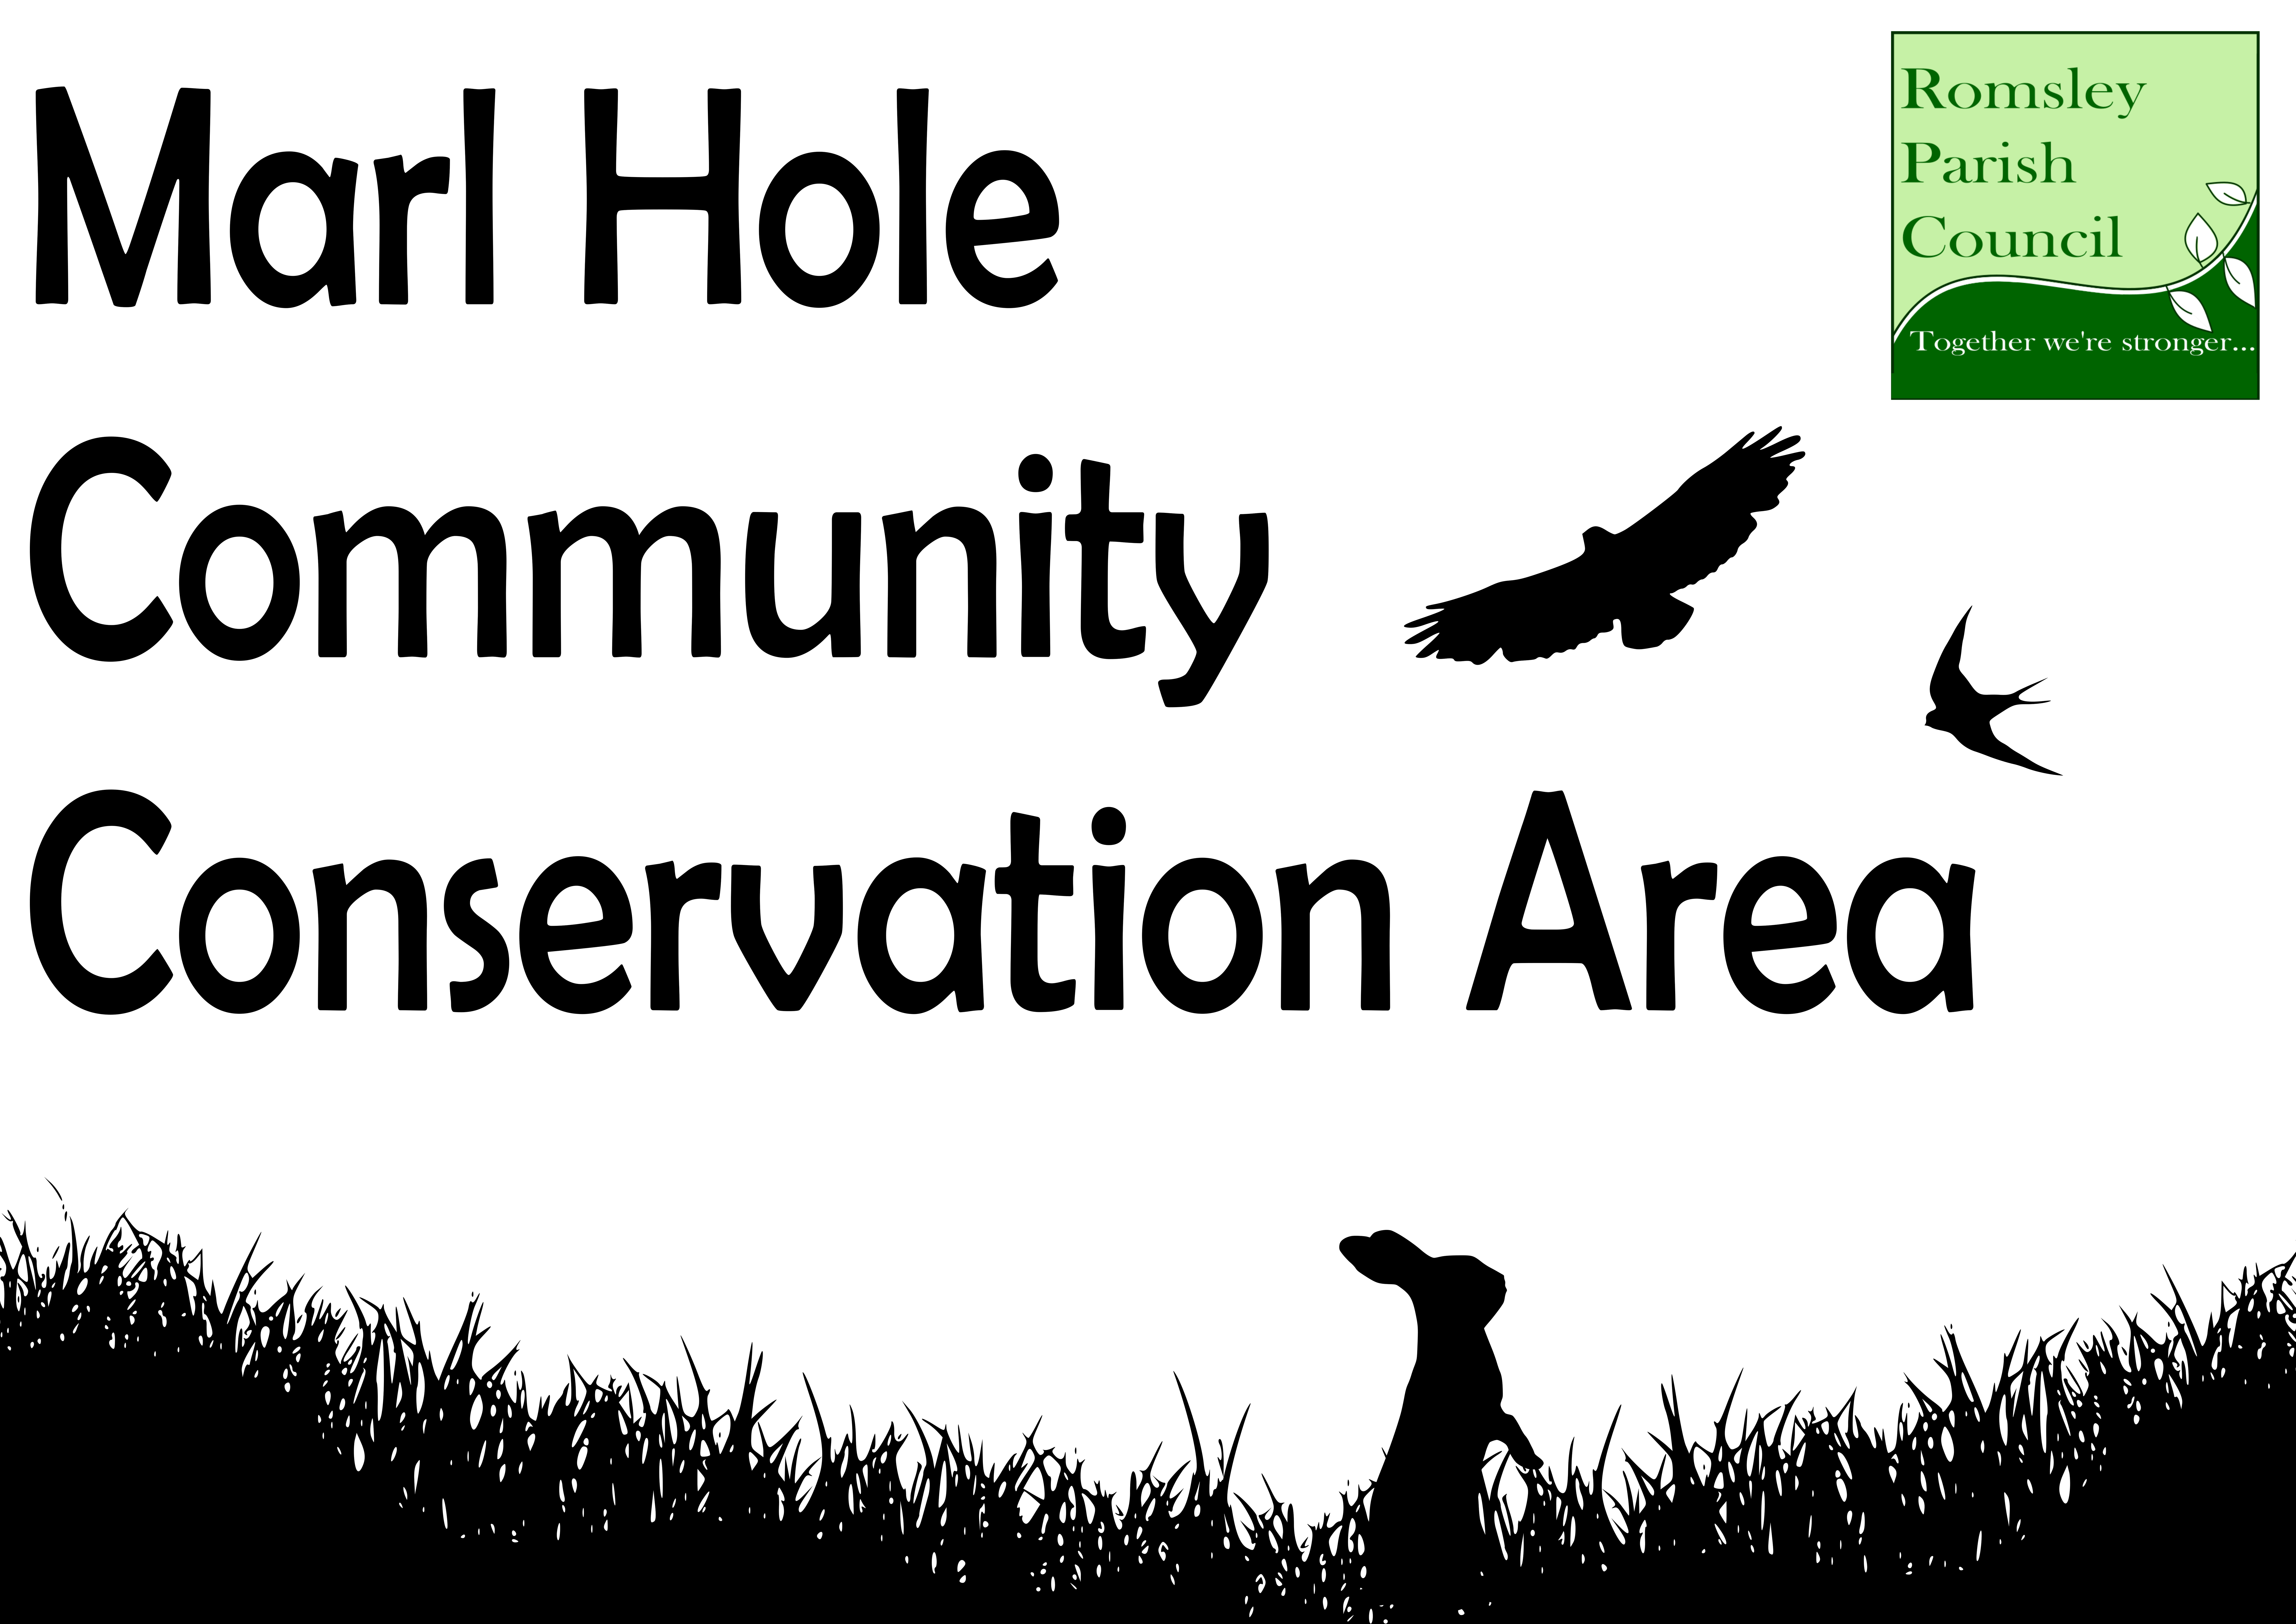 The MarlHole Community Park Sign